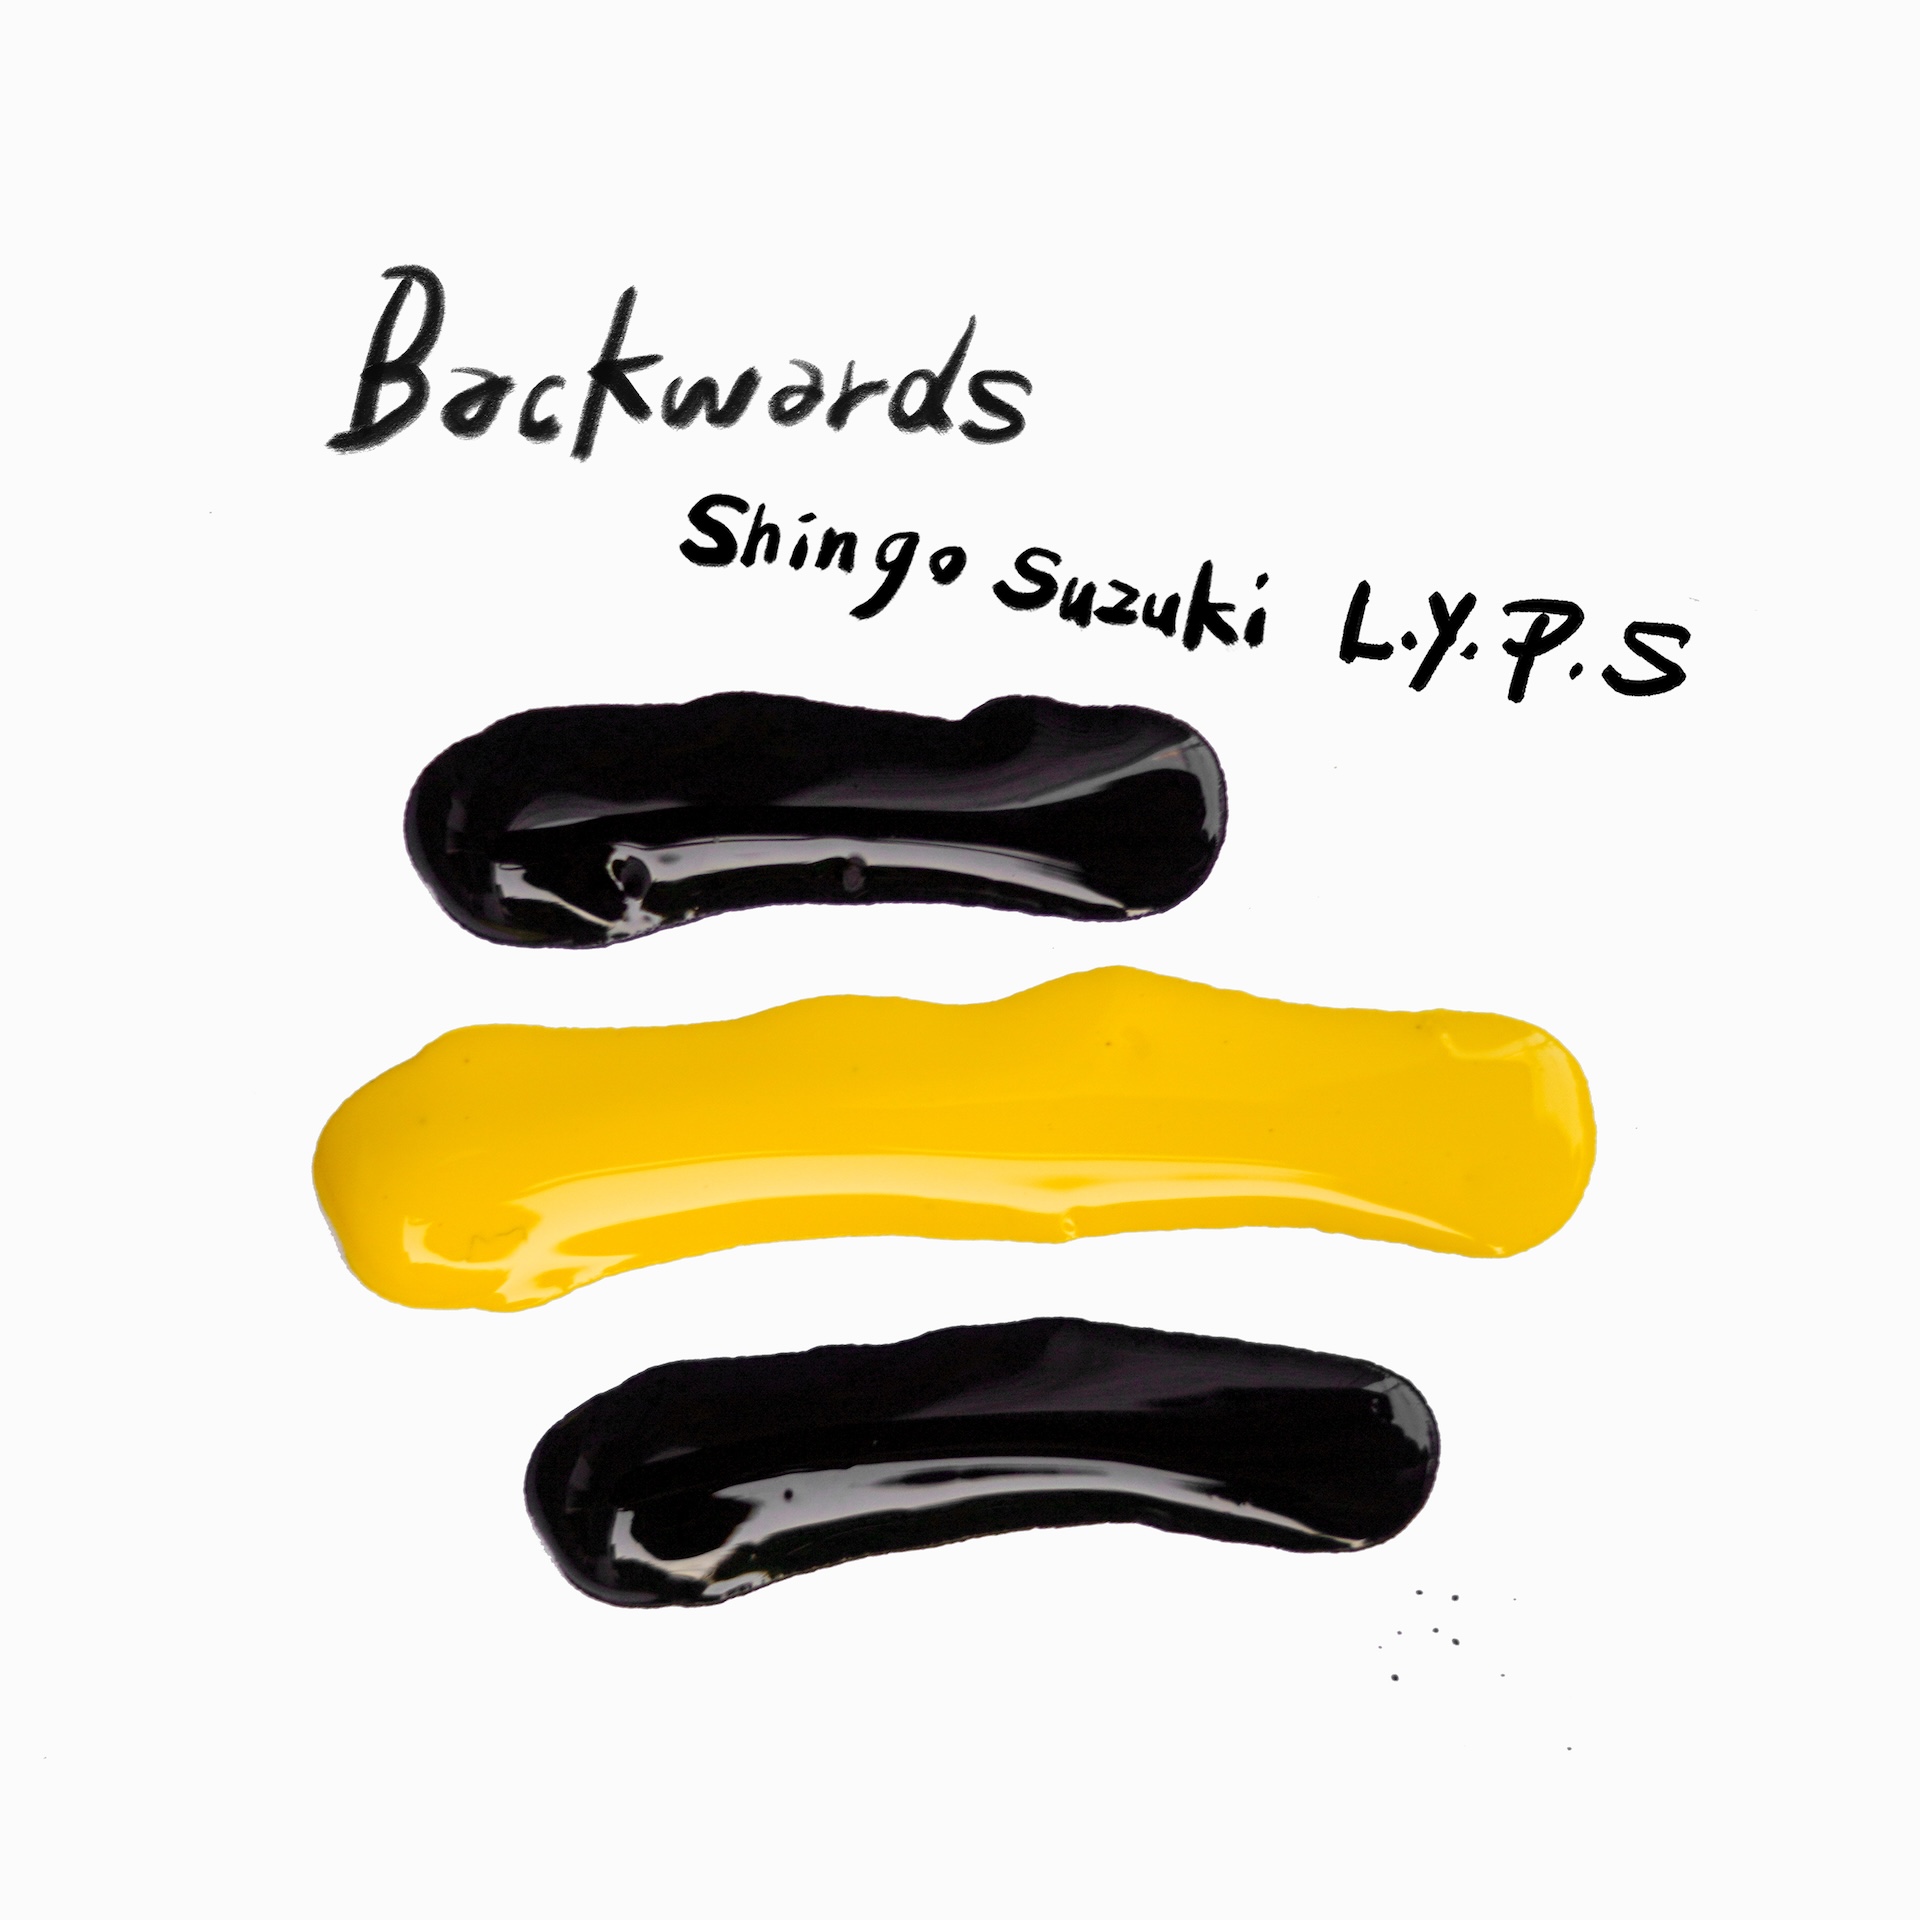 Shingo Suzuki（Ovall）によるオルタナディヴ・ジャズ・プロジェクト＝L.Y.P.S、新曲「Backwards」をリリース music240717-shingo-suzuki1